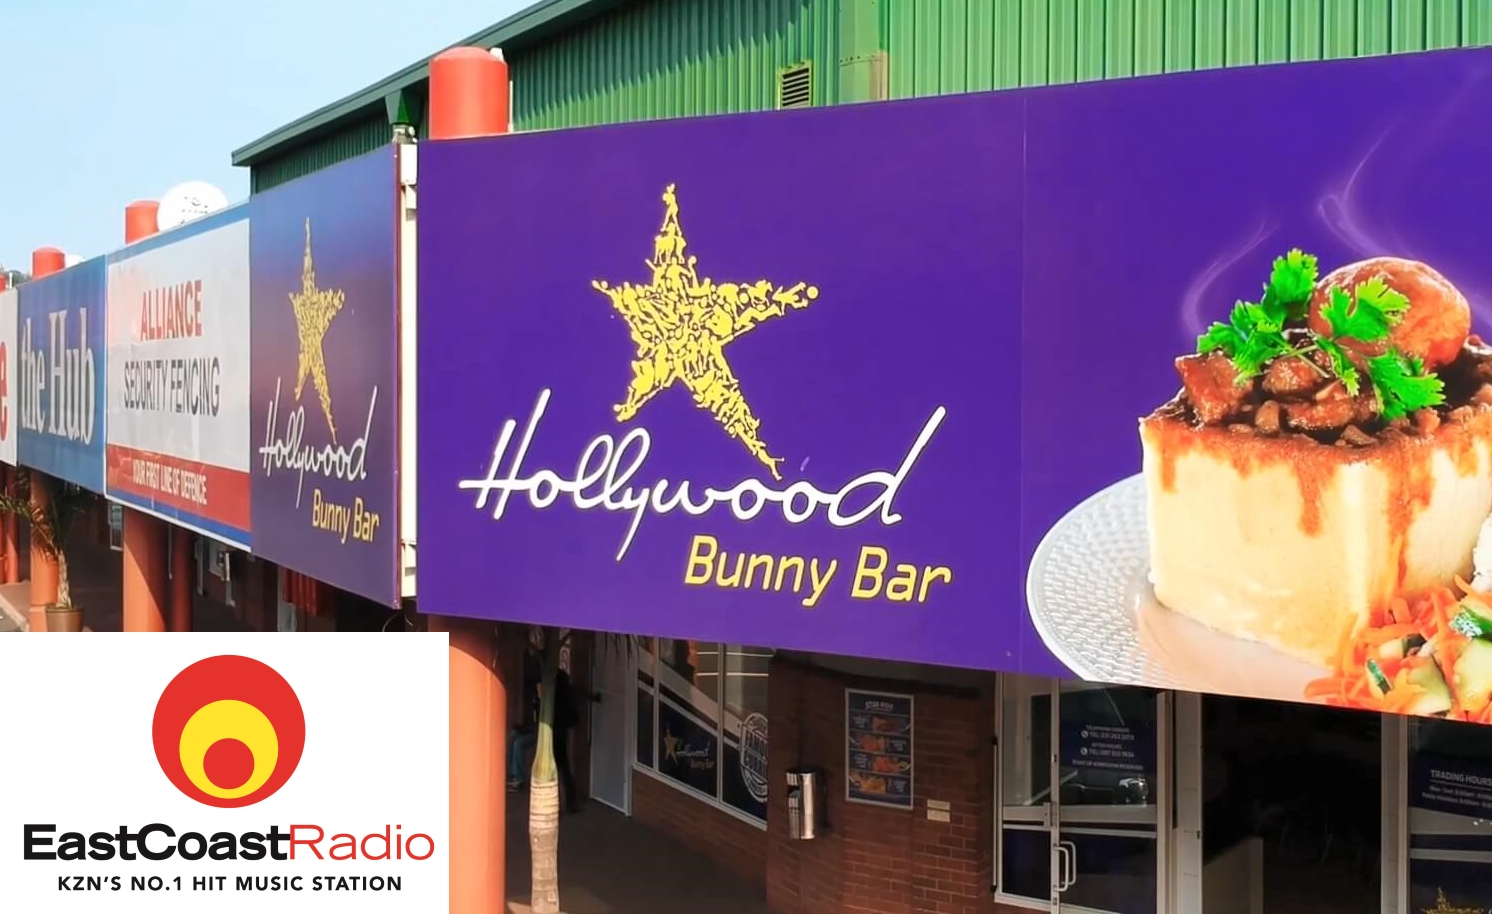 Hollywood Bunny Bar and East Coast Radio at the Springfield Retail Centre